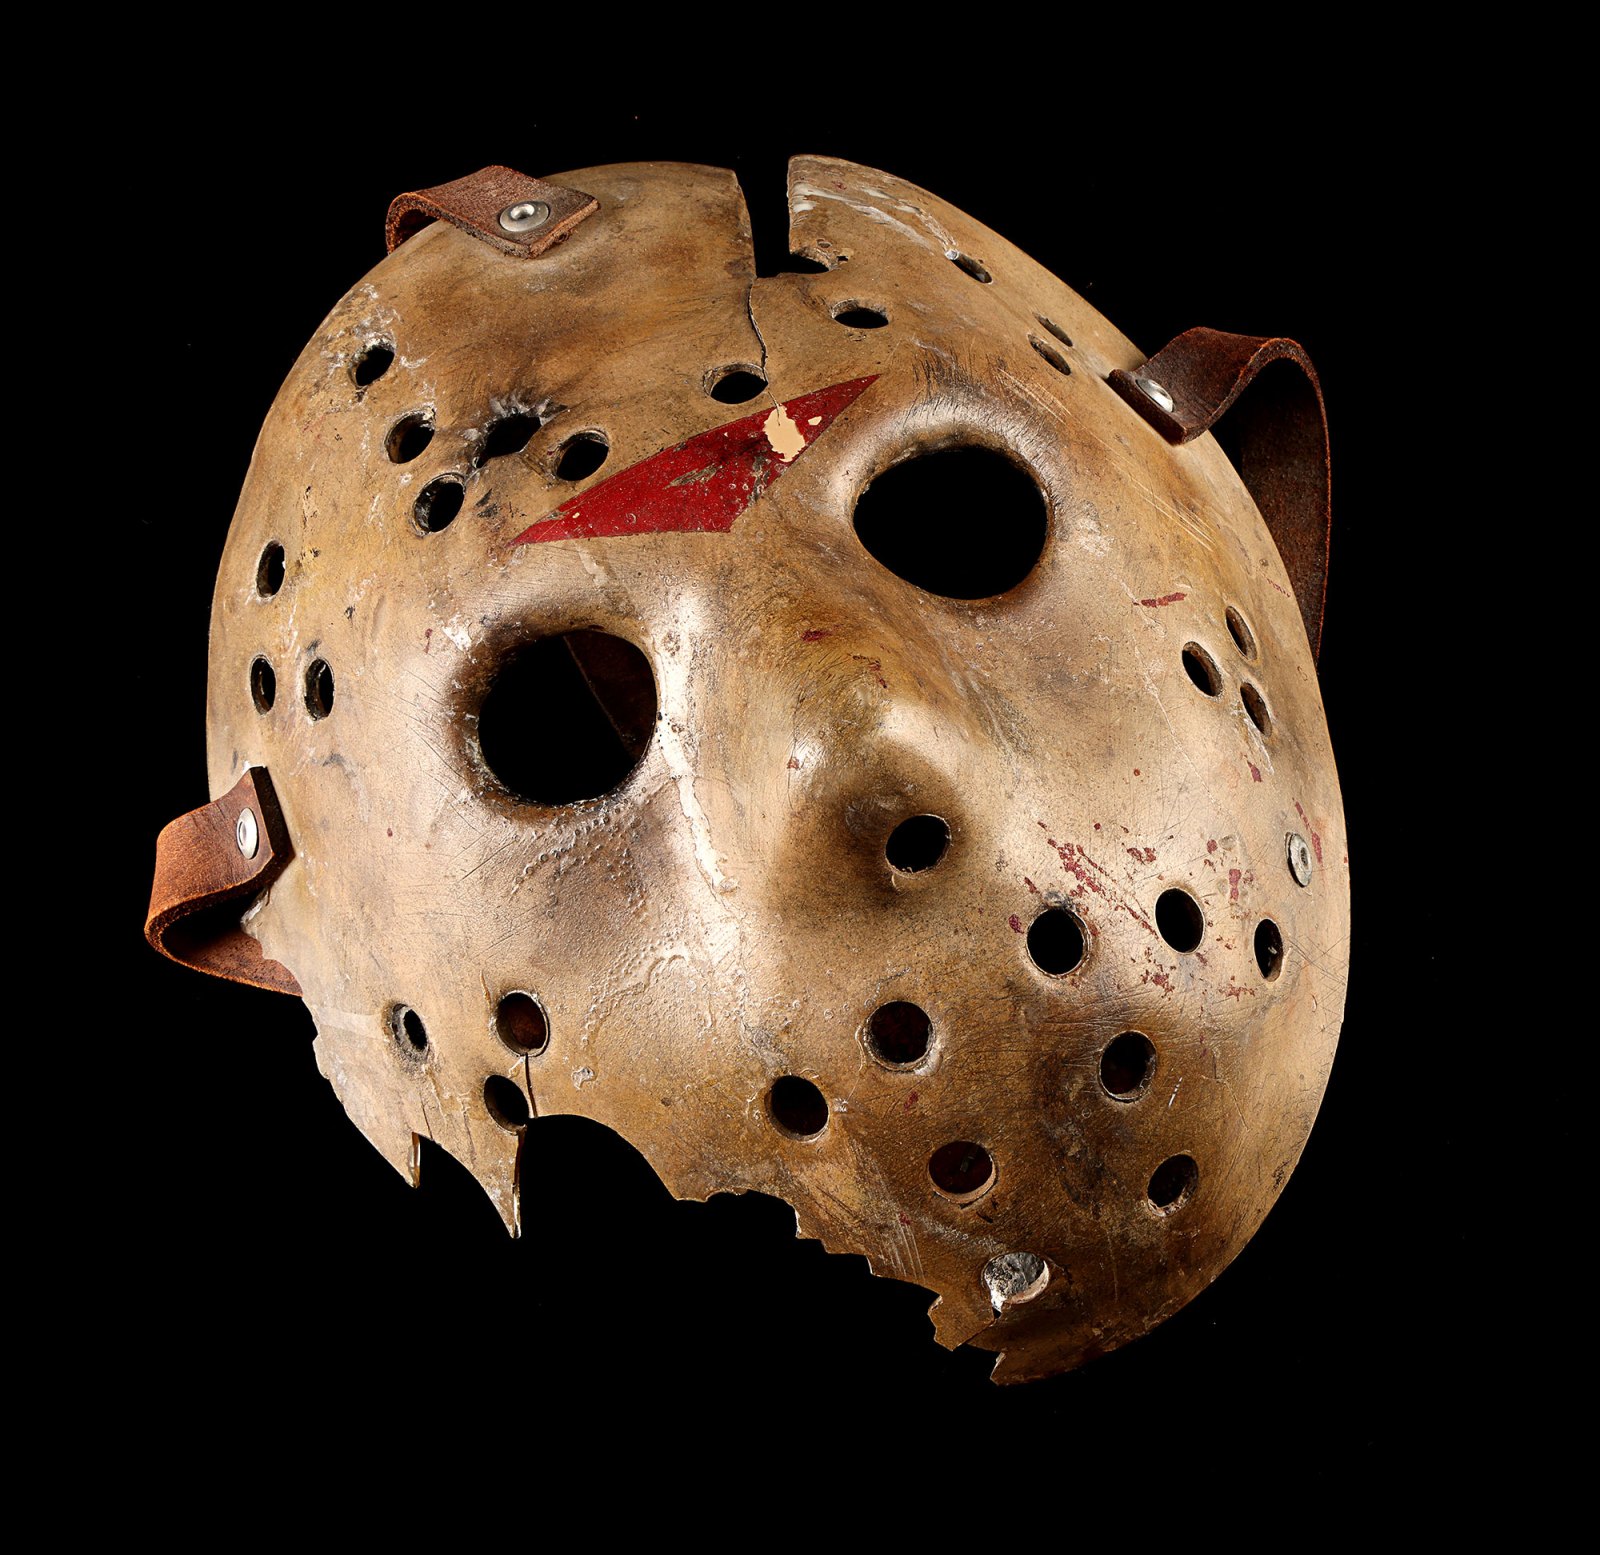 rig Grunde eksil Jason Voorhees' Hockey Mask, More Movie Memorabilia Up for Auction